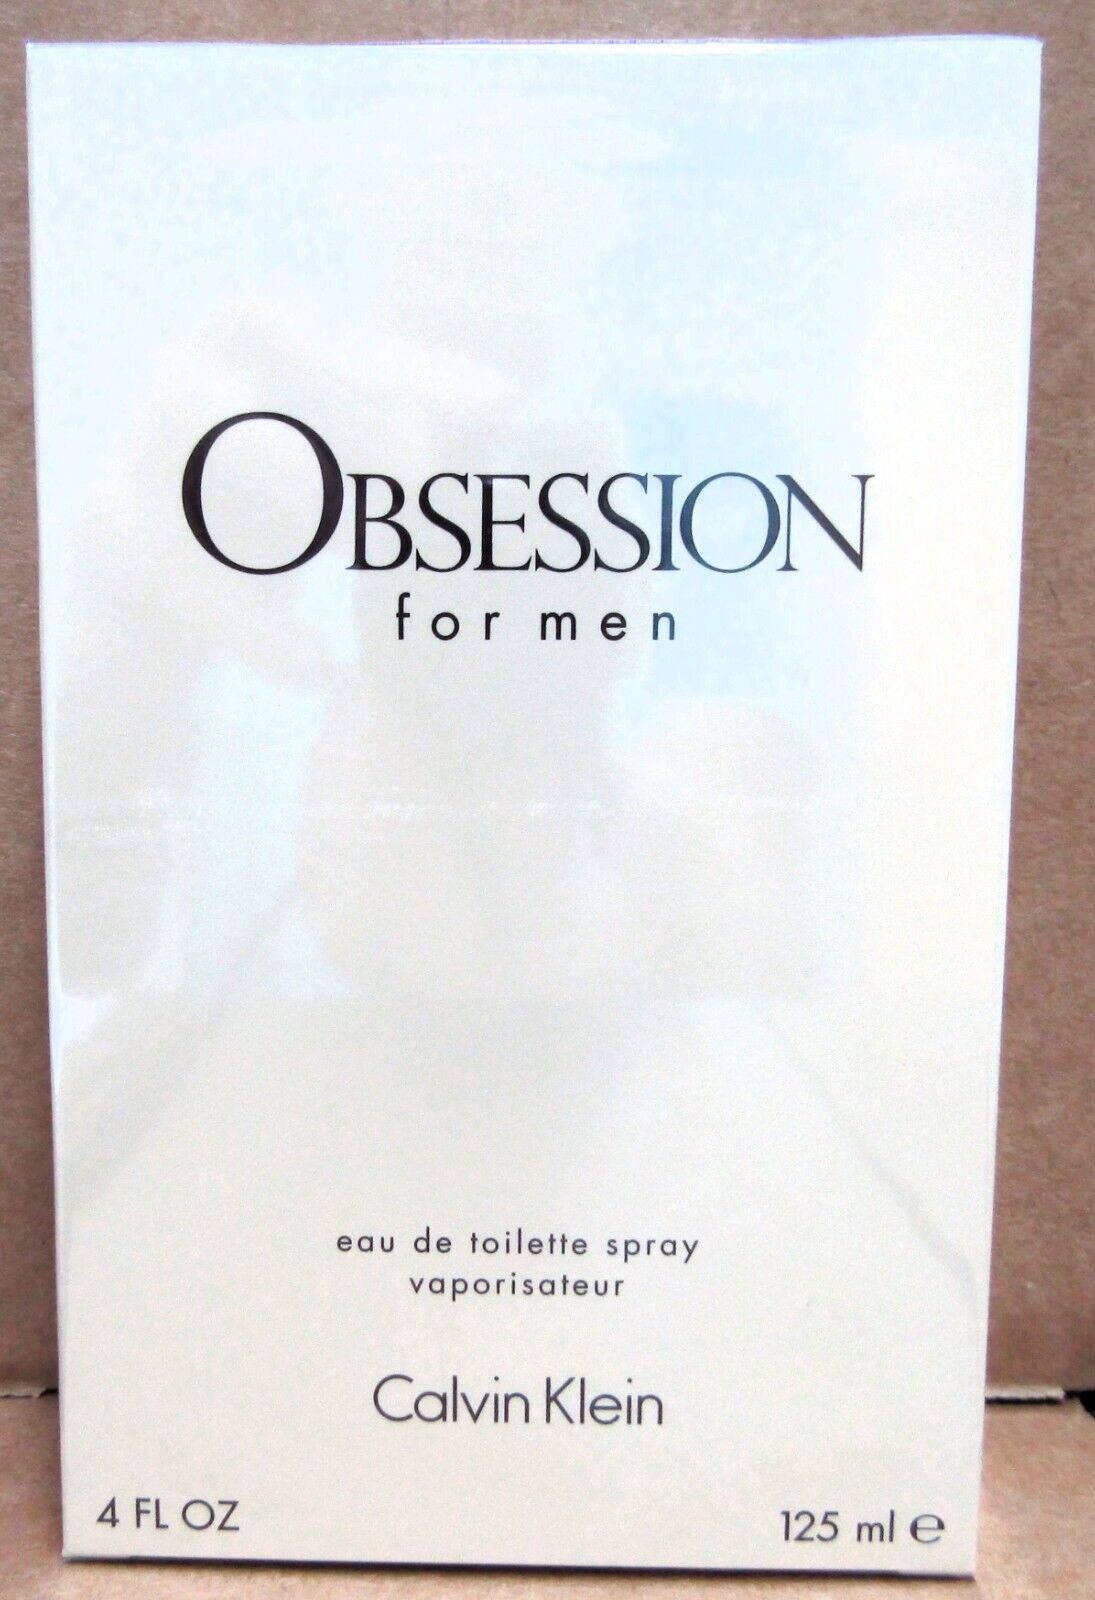 New in Box Calvin Klein Obsession for Men Eau de Toilette Spray 4 fl oz 125 ml  - $29.69